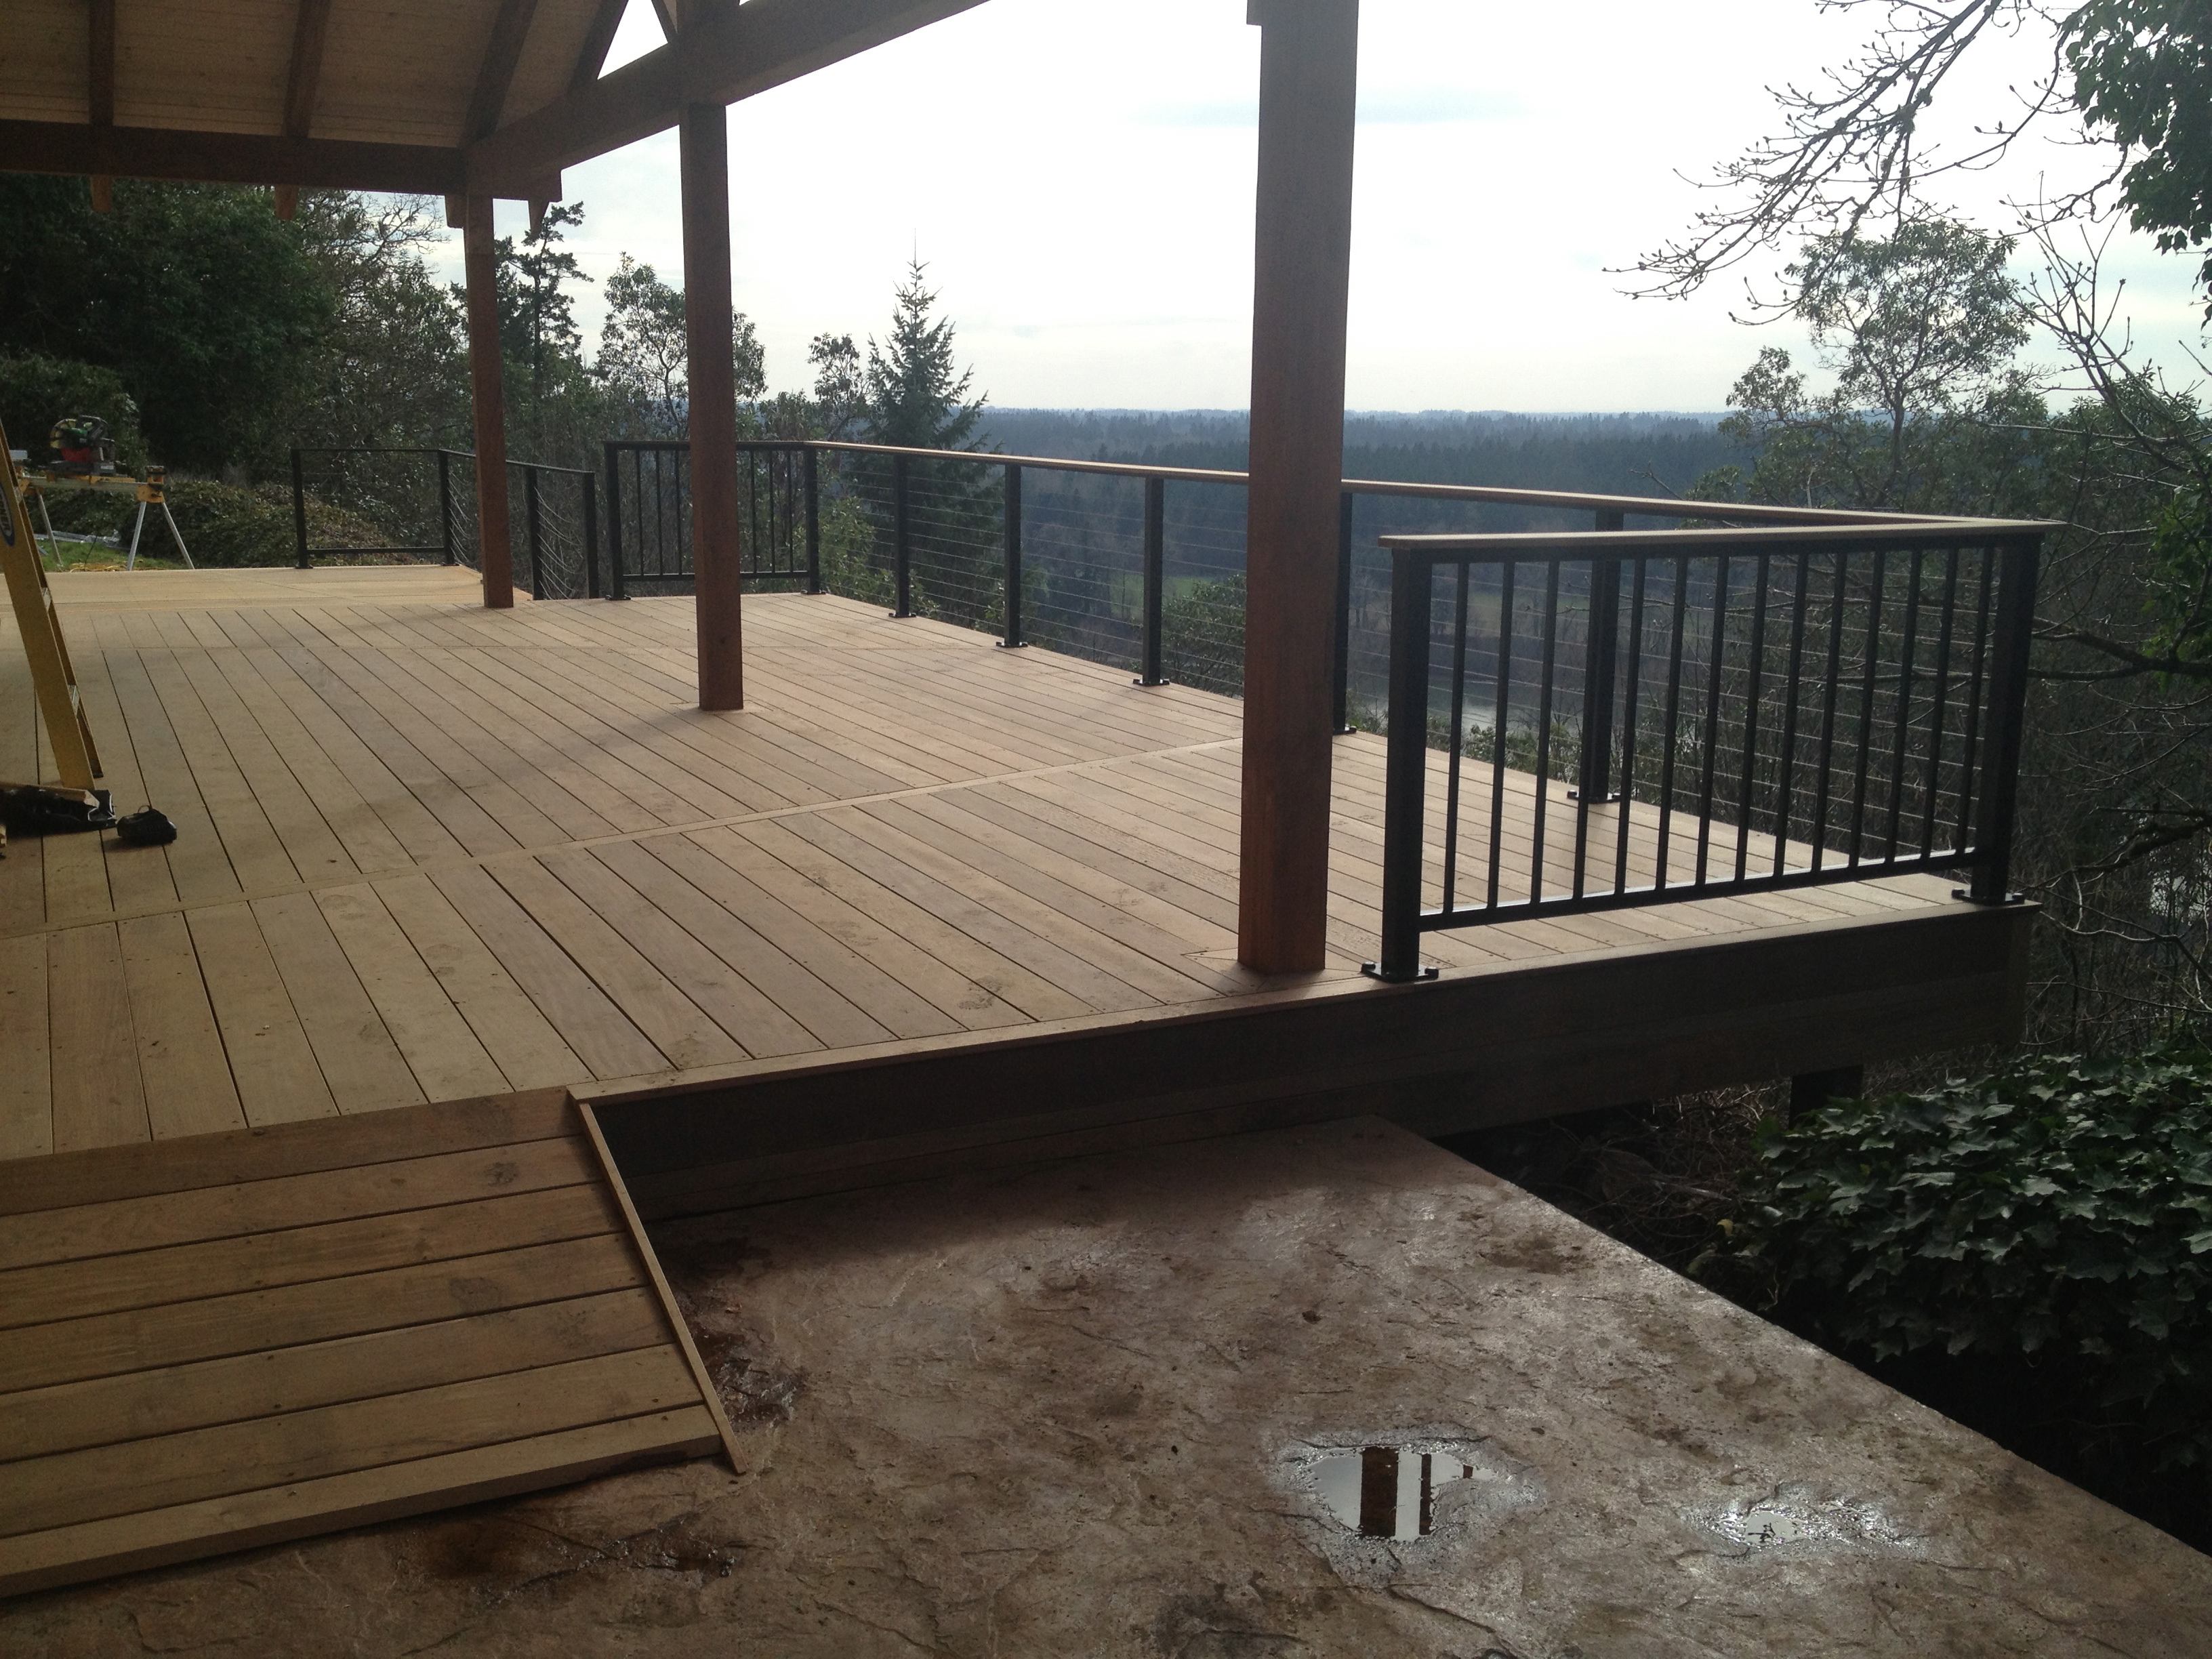 Ironwood deck w/ramp, overhang and rails